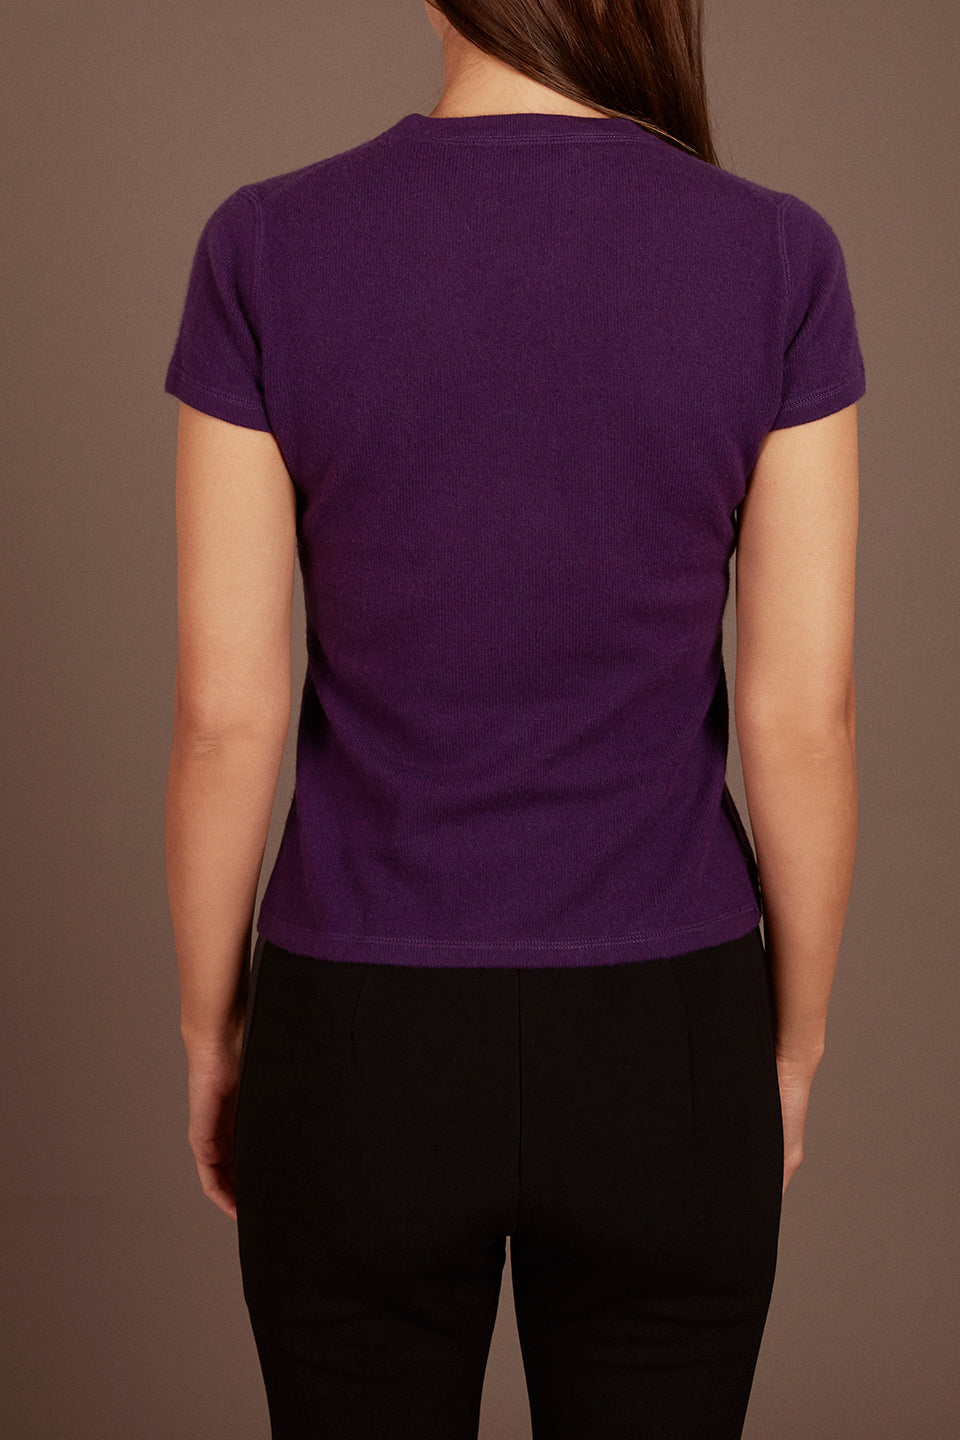 HENRI BENDEL <br> Cashmere Purple Sweater <br> Size M